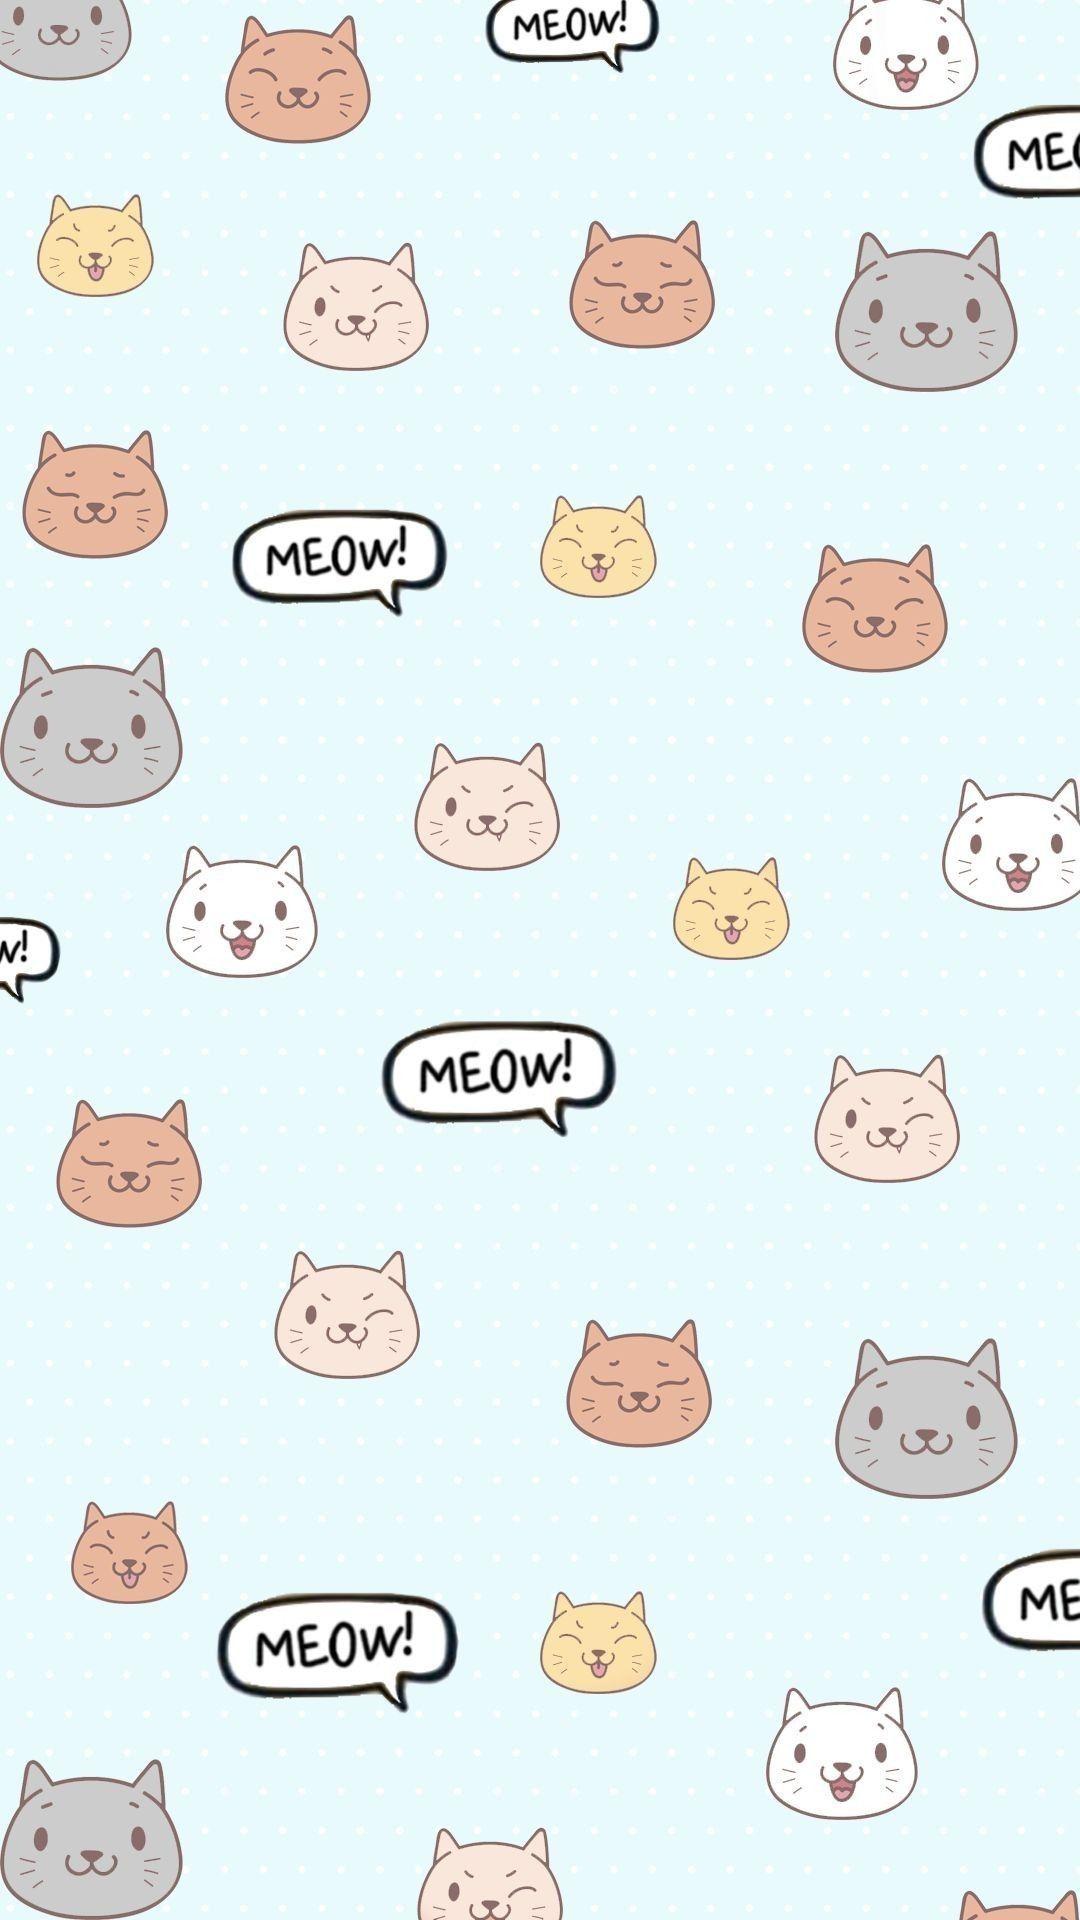 Cat Cartoon Phone Wallpapers  Top Free Cat Cartoon Phone Backgrounds   WallpaperAccess